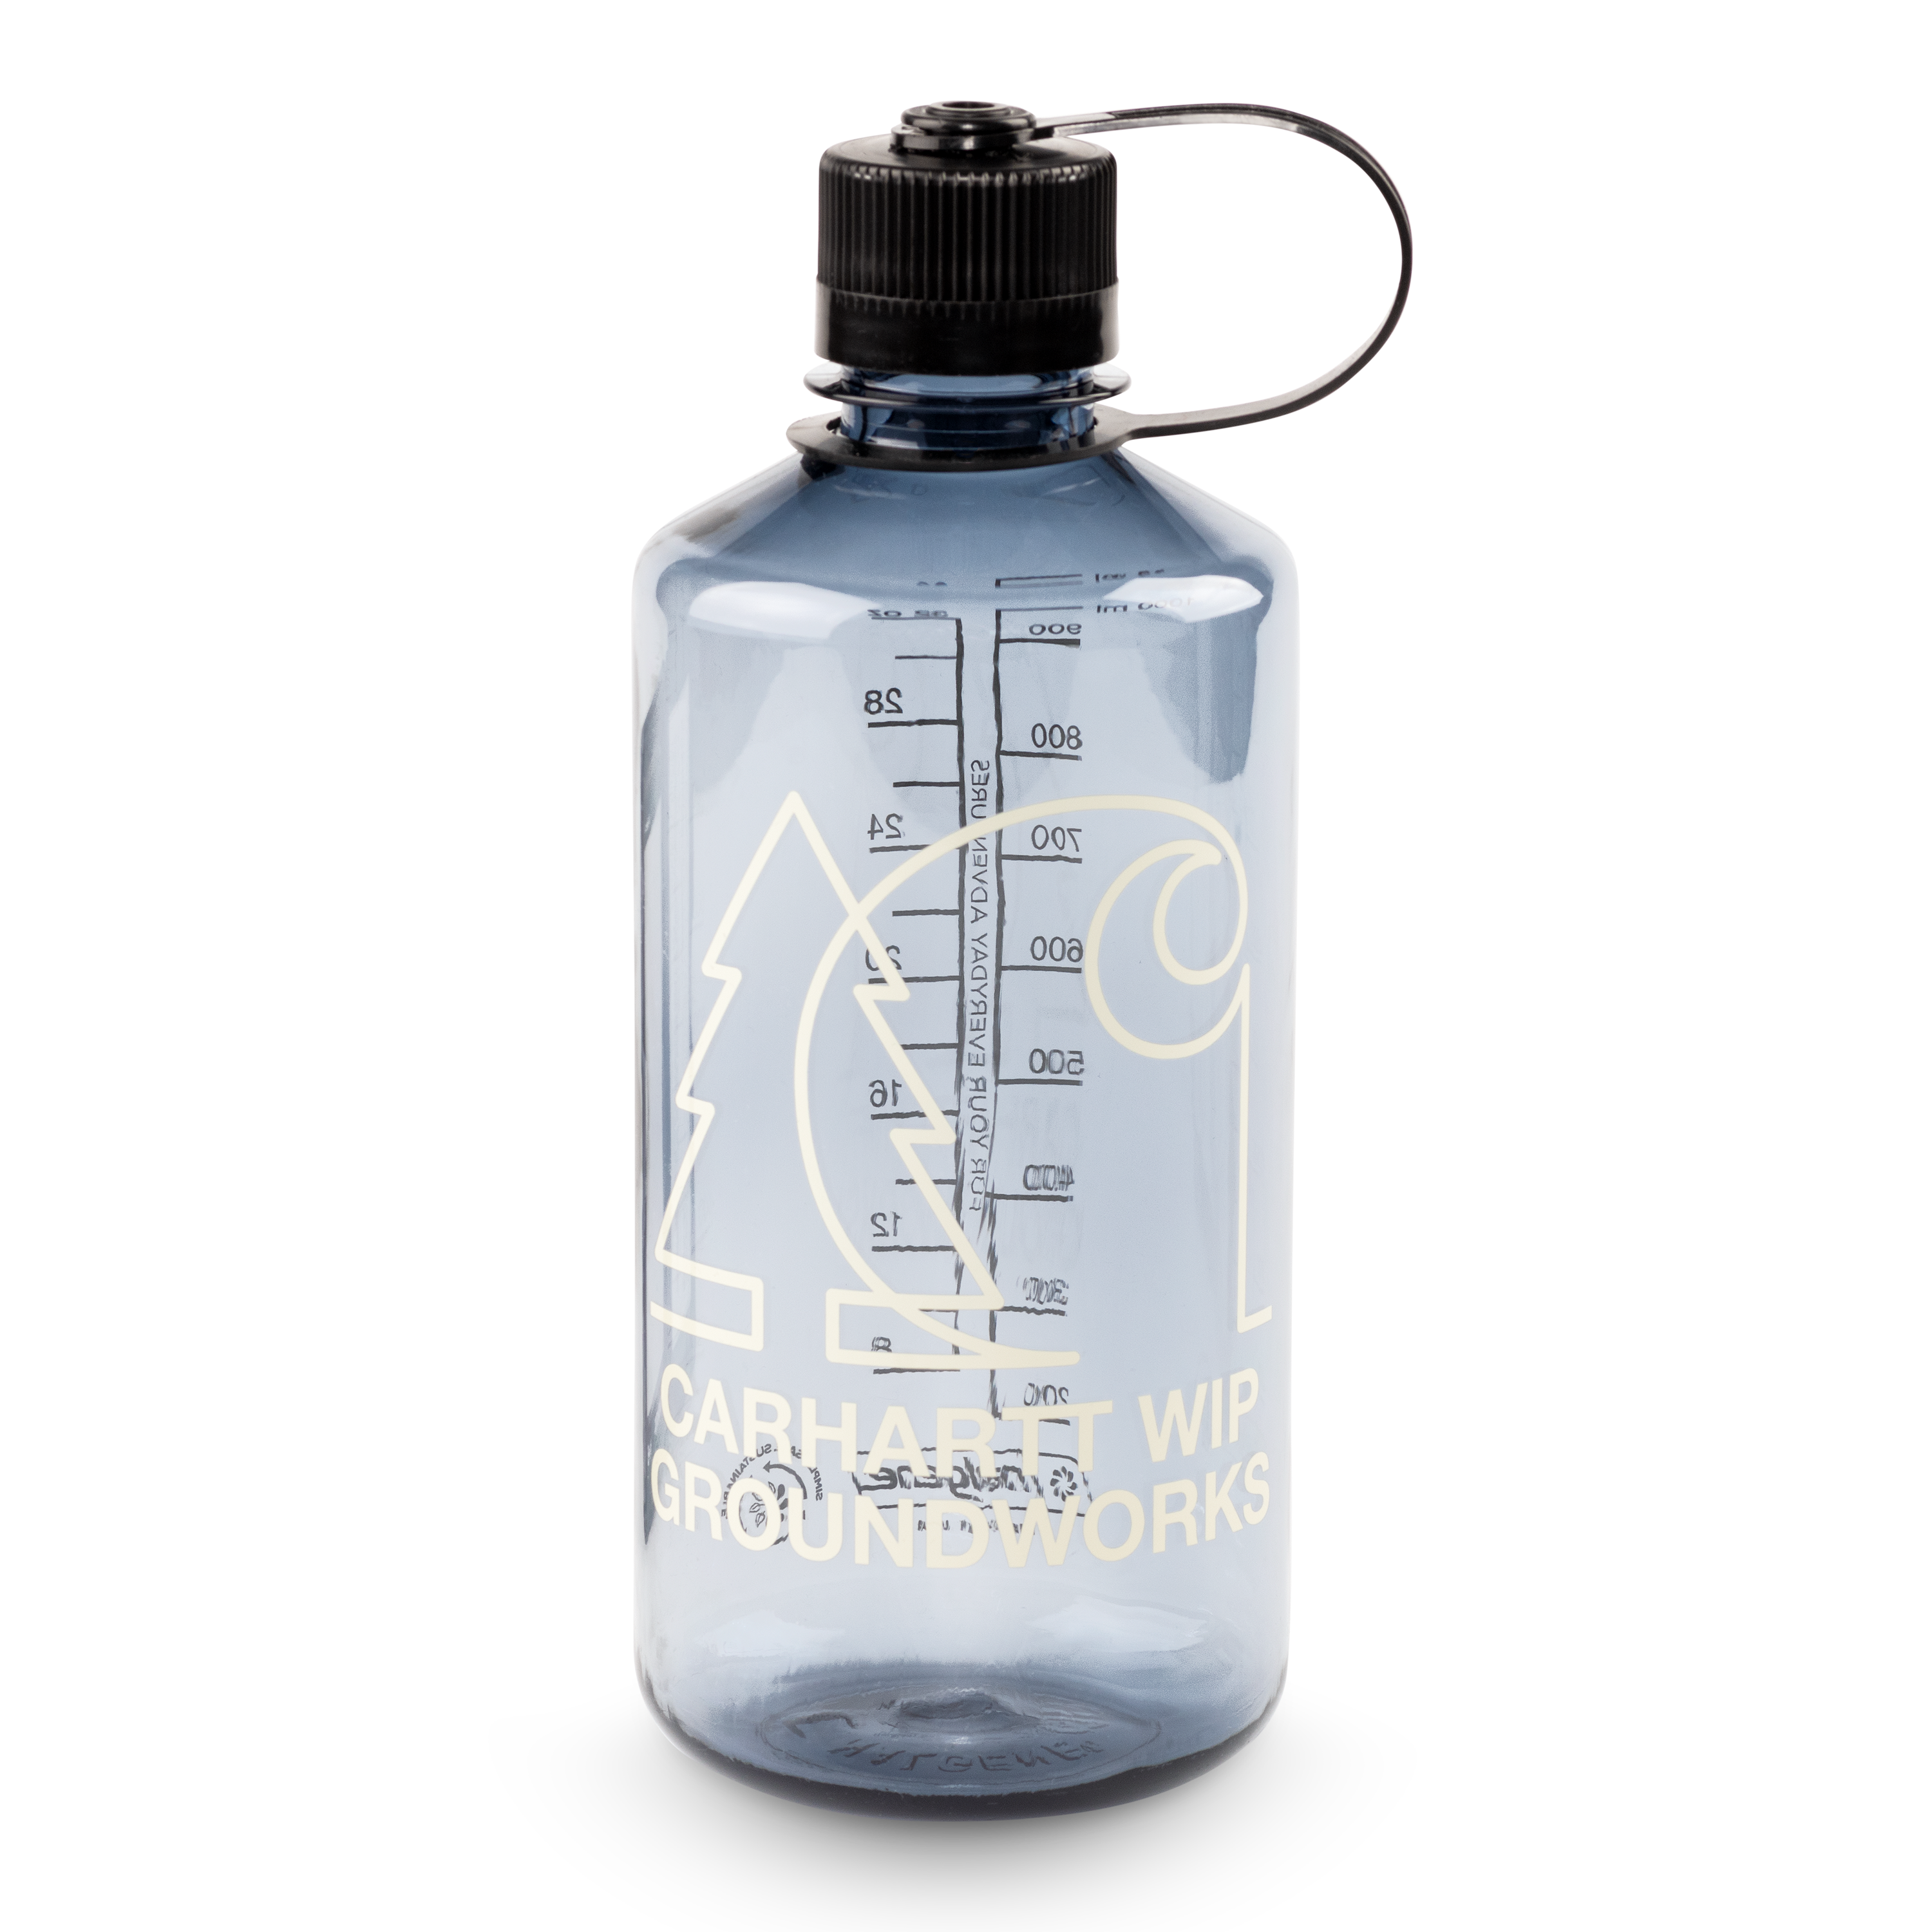 Carhartt WIP Groundworks Water Bottle in